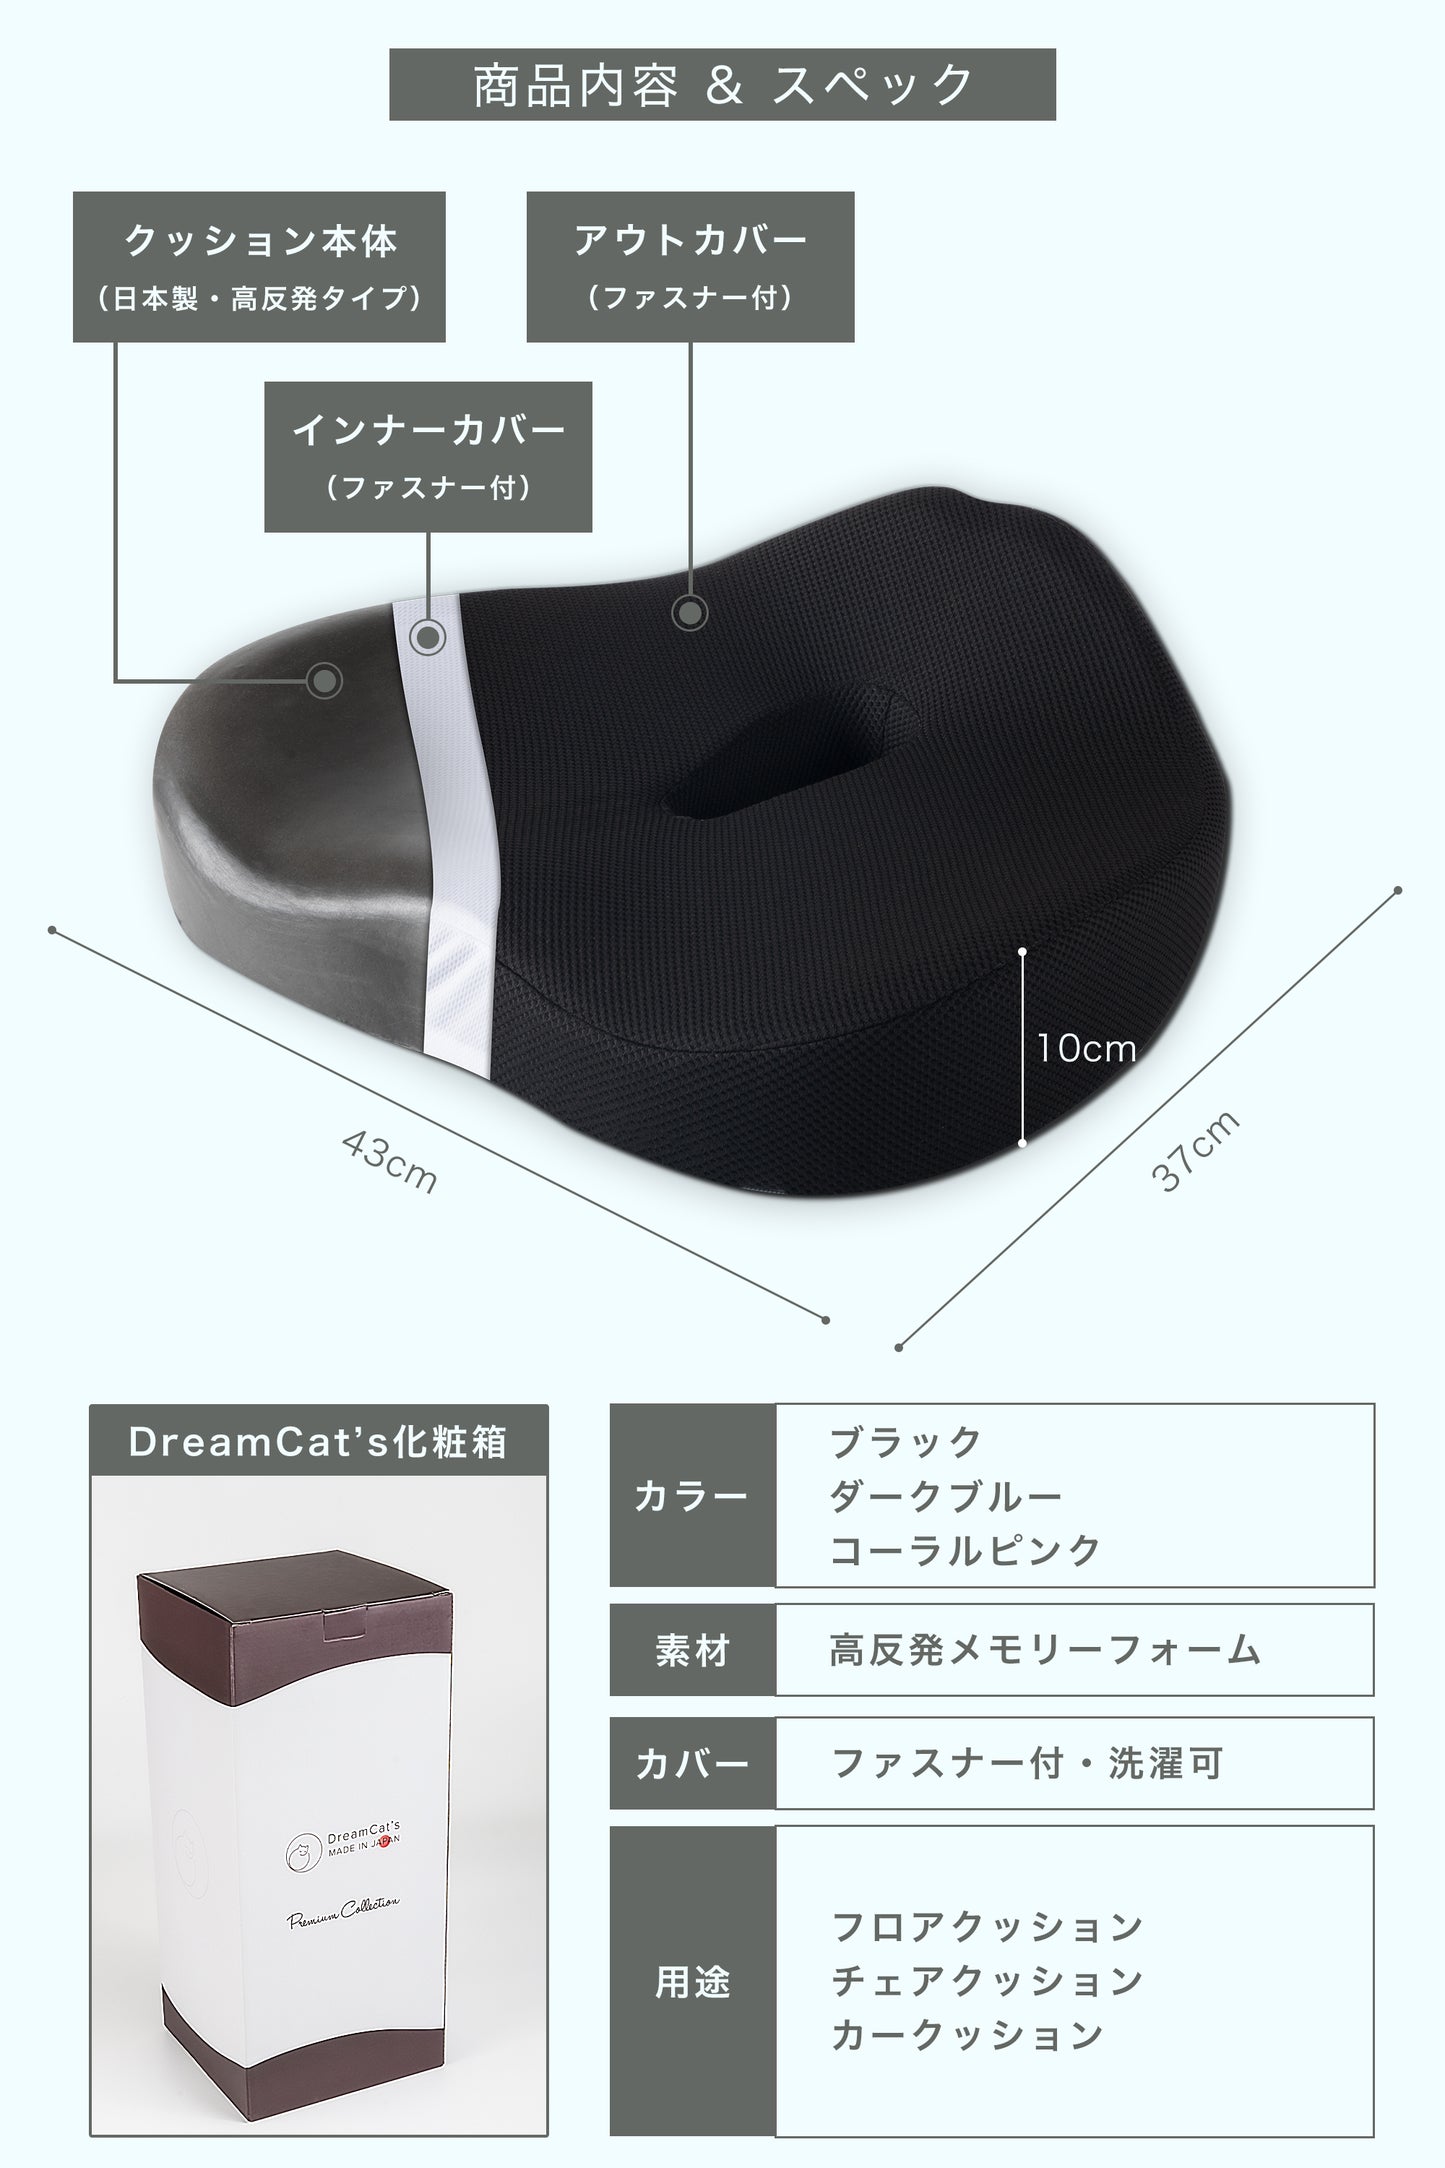 【DreamCat's】クッション 椅子 クッション 座布団 シートクッション フロアクッション チェアクッション